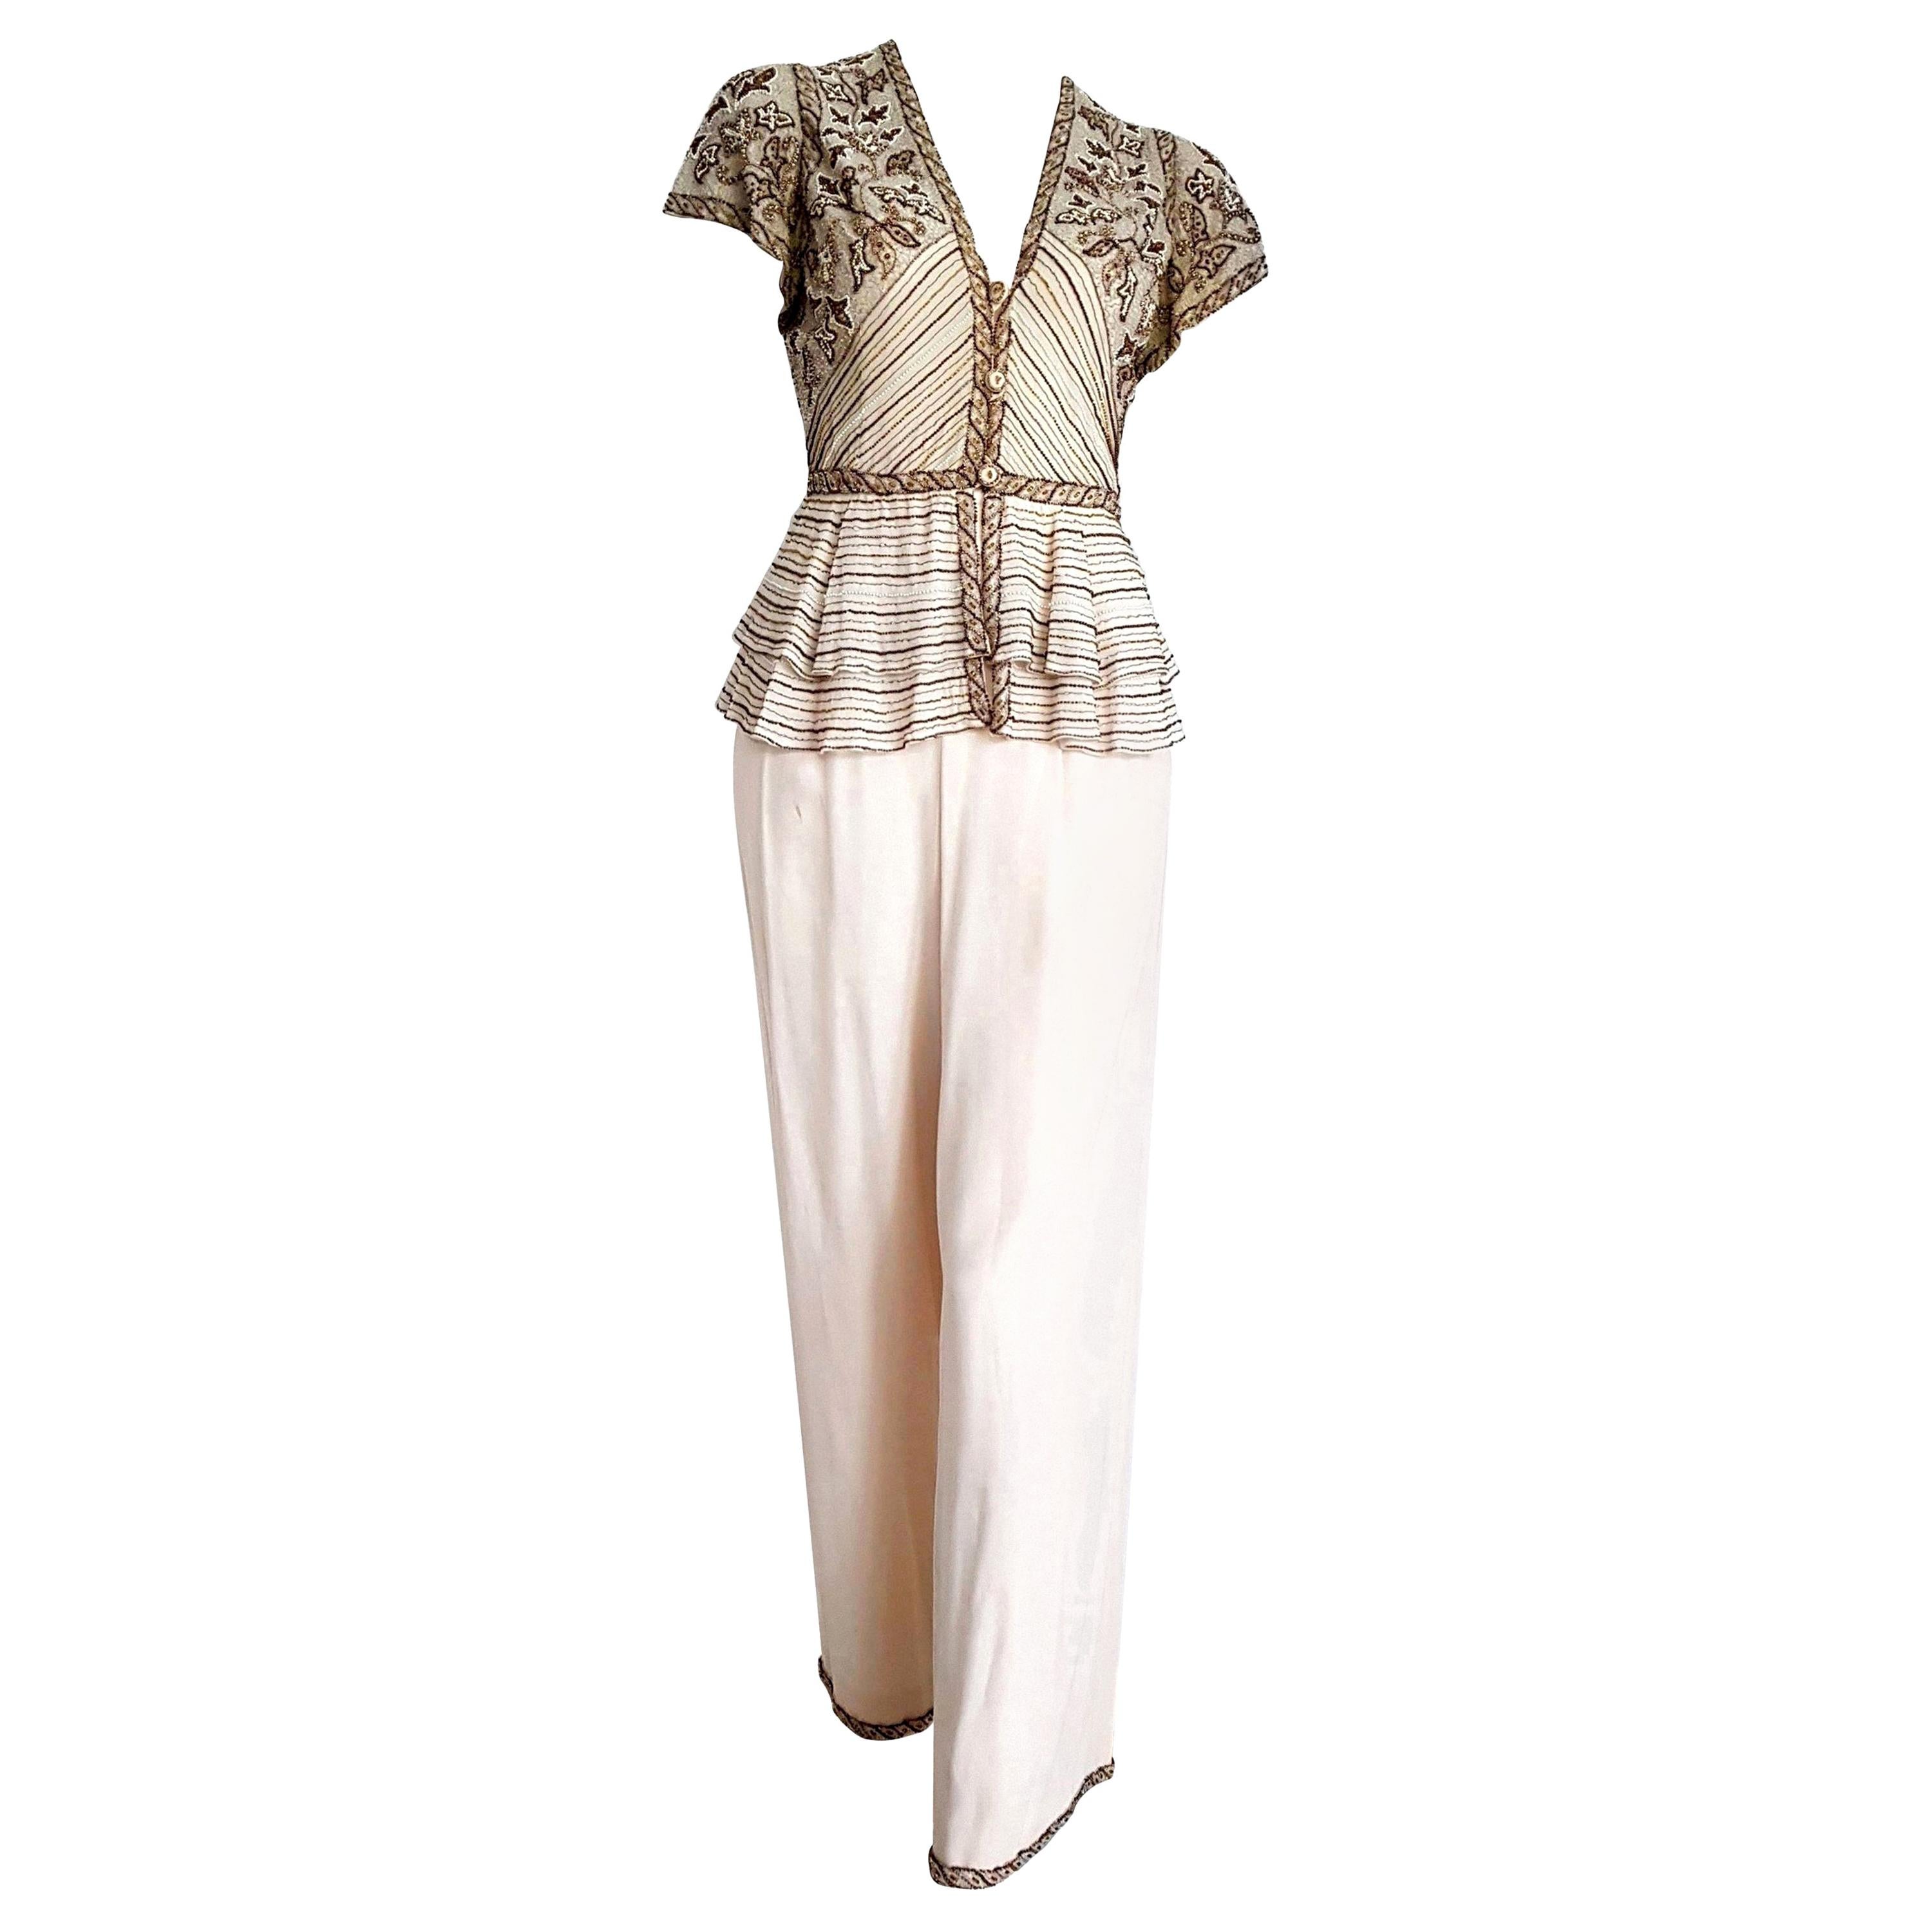 VALENTINO "New" Haute Couture Swarovski Embroidered Beaded Silk Dress - Unworn For Sale